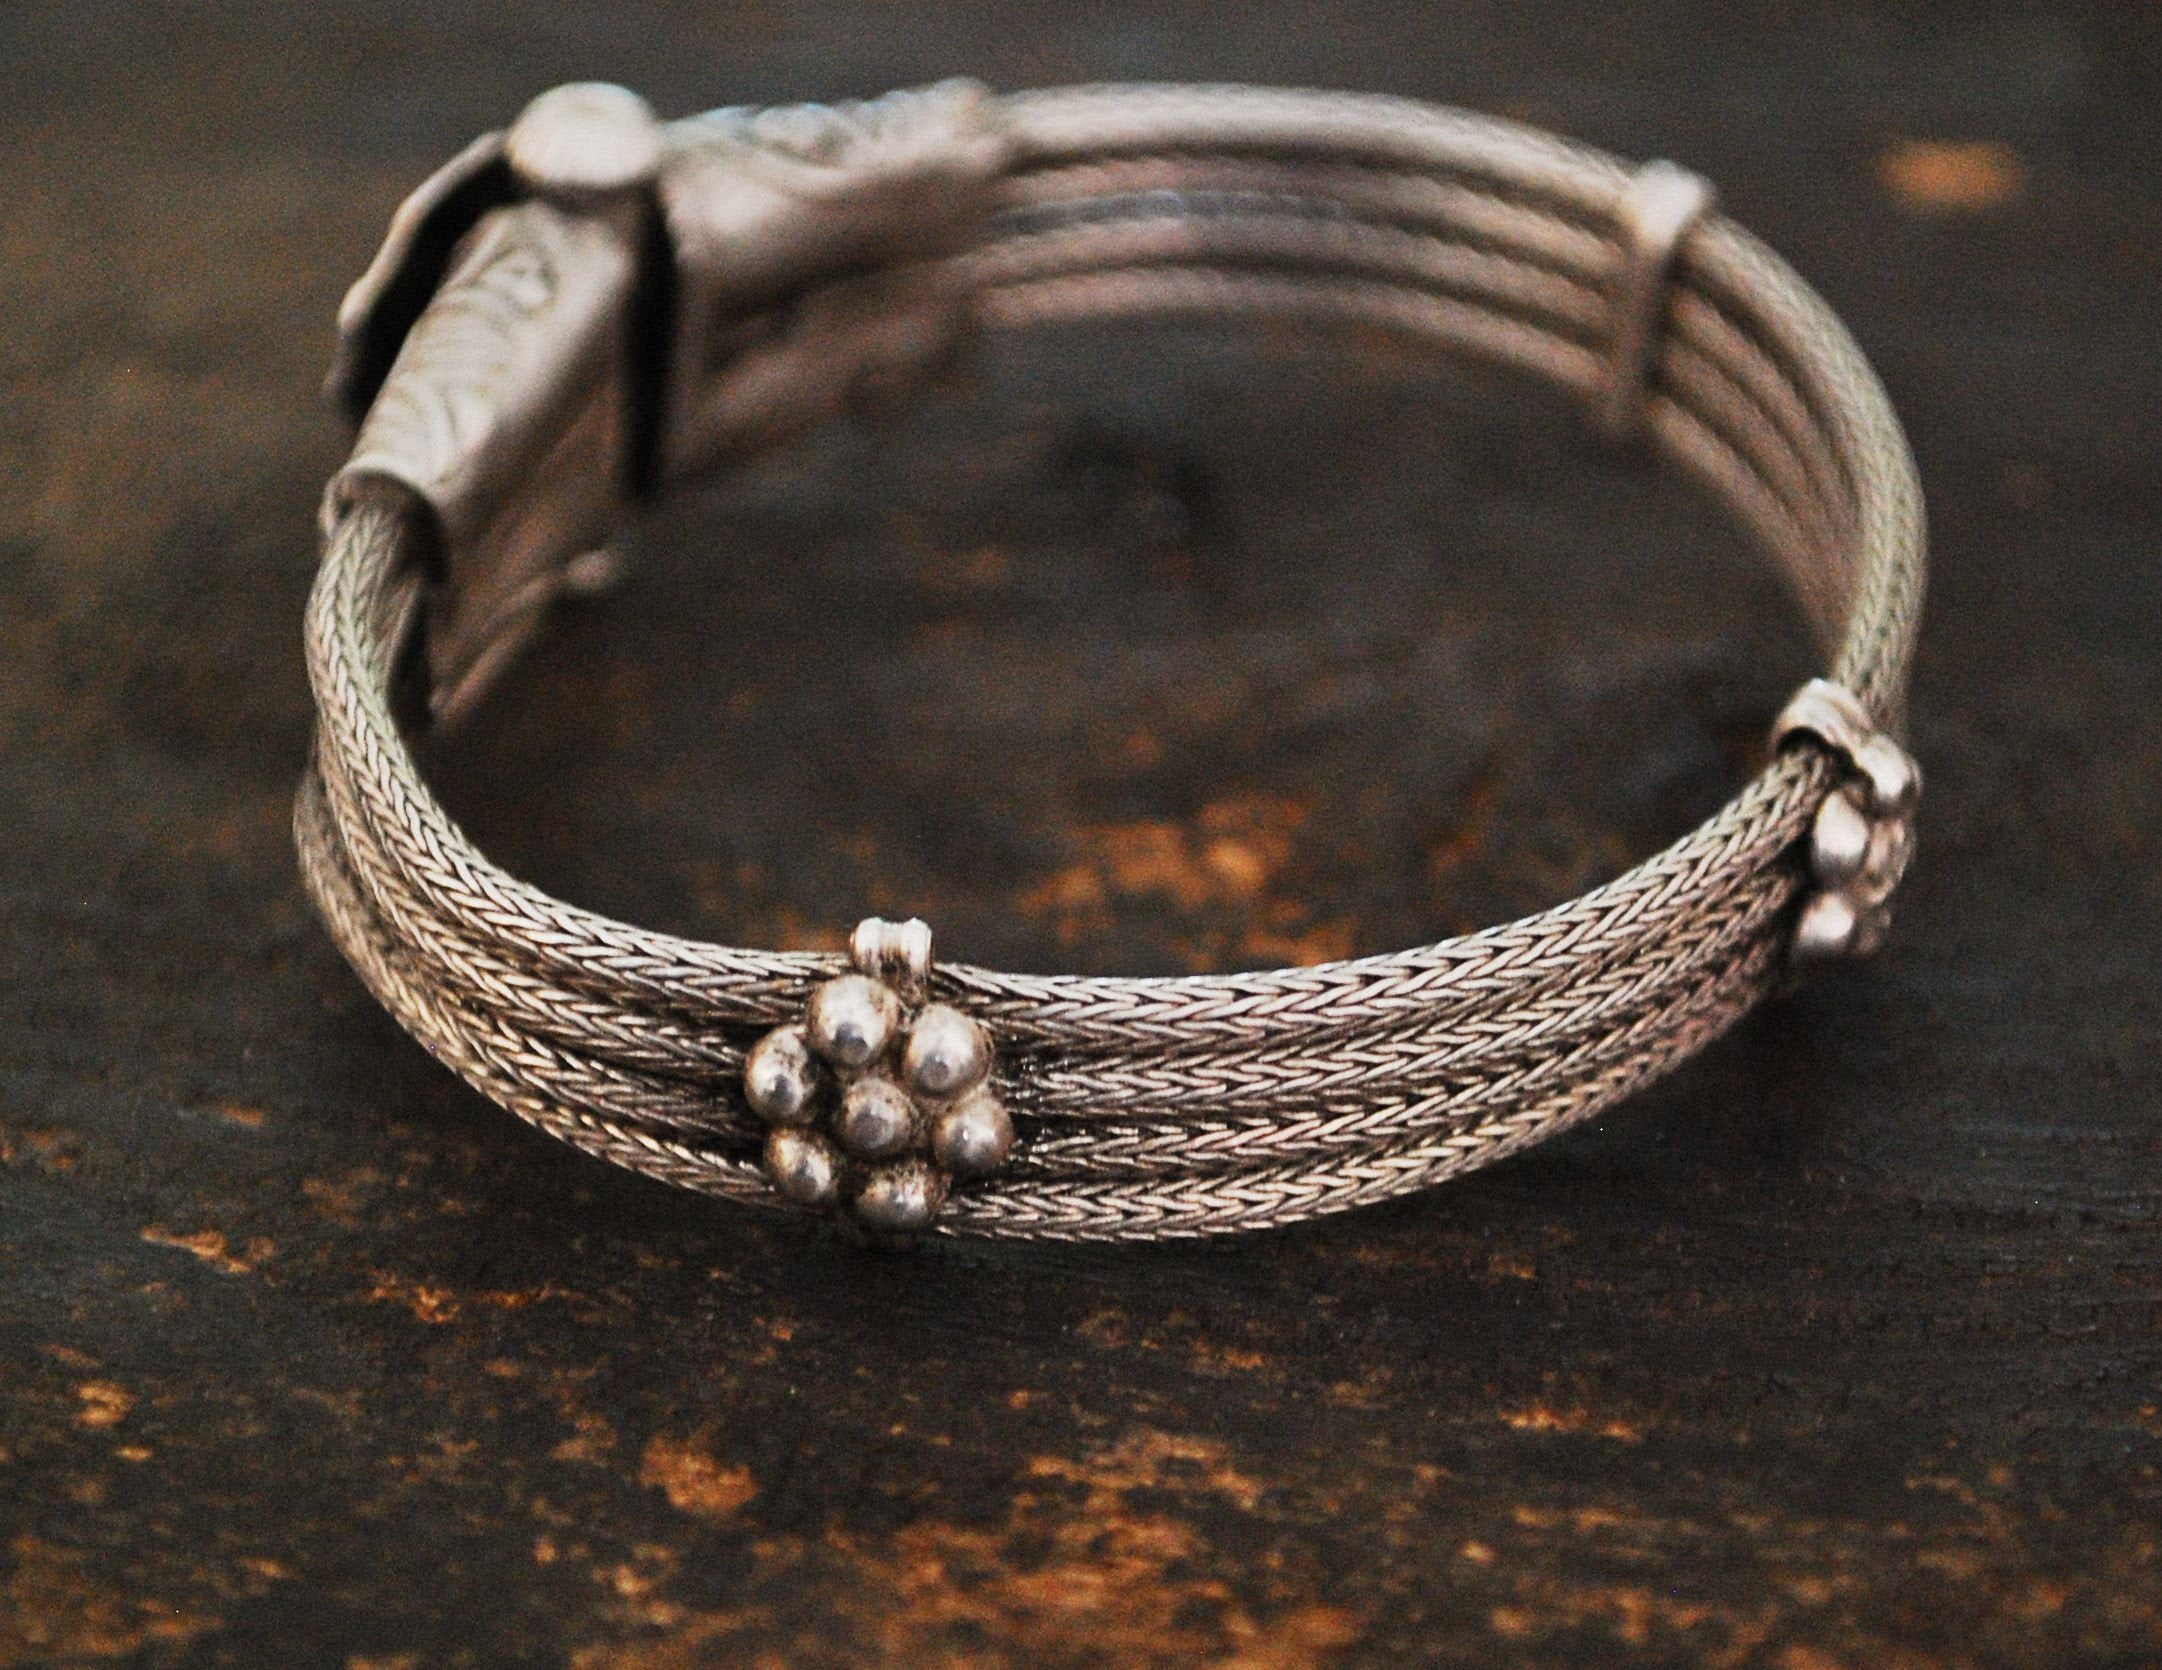 Rajasthani Silver Bracelet - Indian Snake Chain Bracelet - Rajasthan Snake Chain Bracelet with Flowers - Rajasthani Jewelry